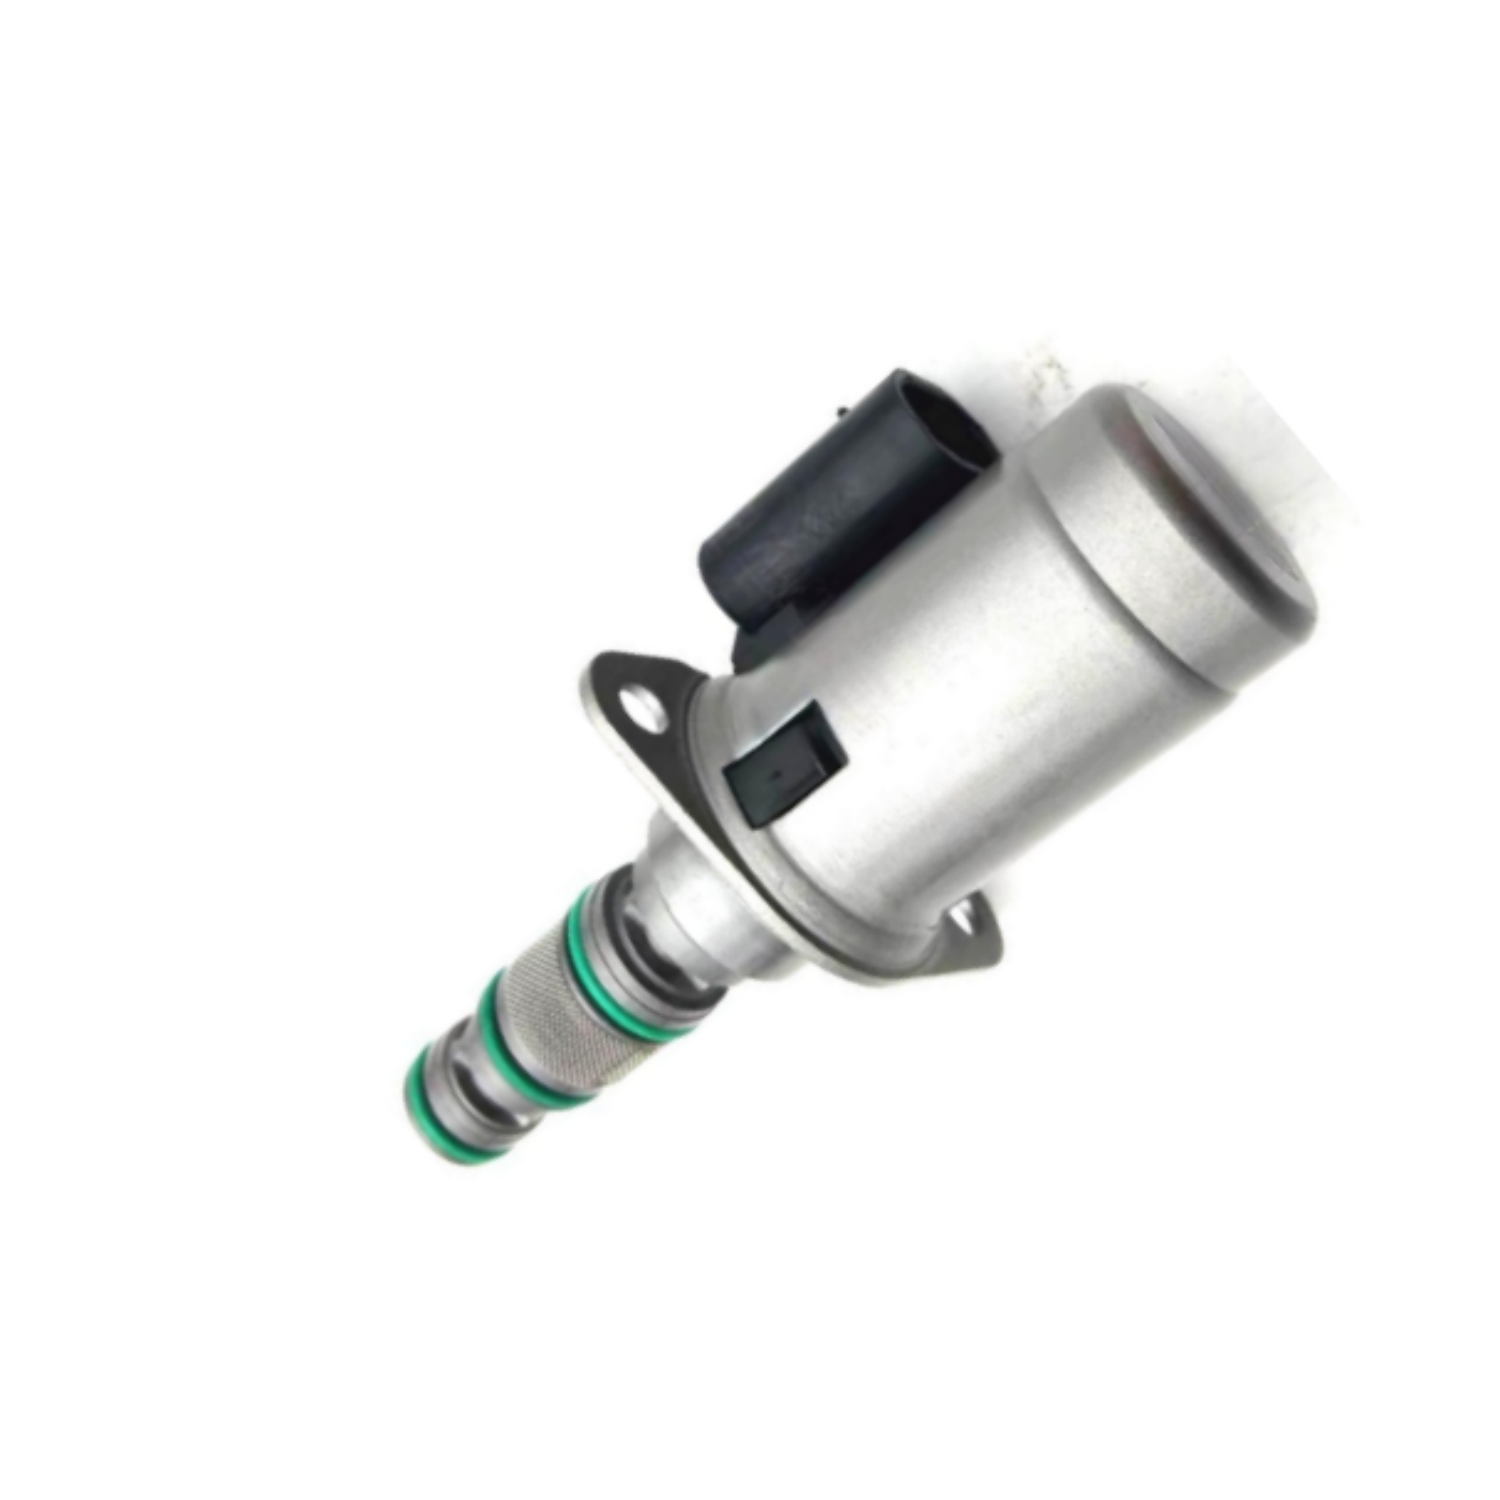 Applicable to XCMG loader transmission solenoid valve 272101035/SV98-T40S